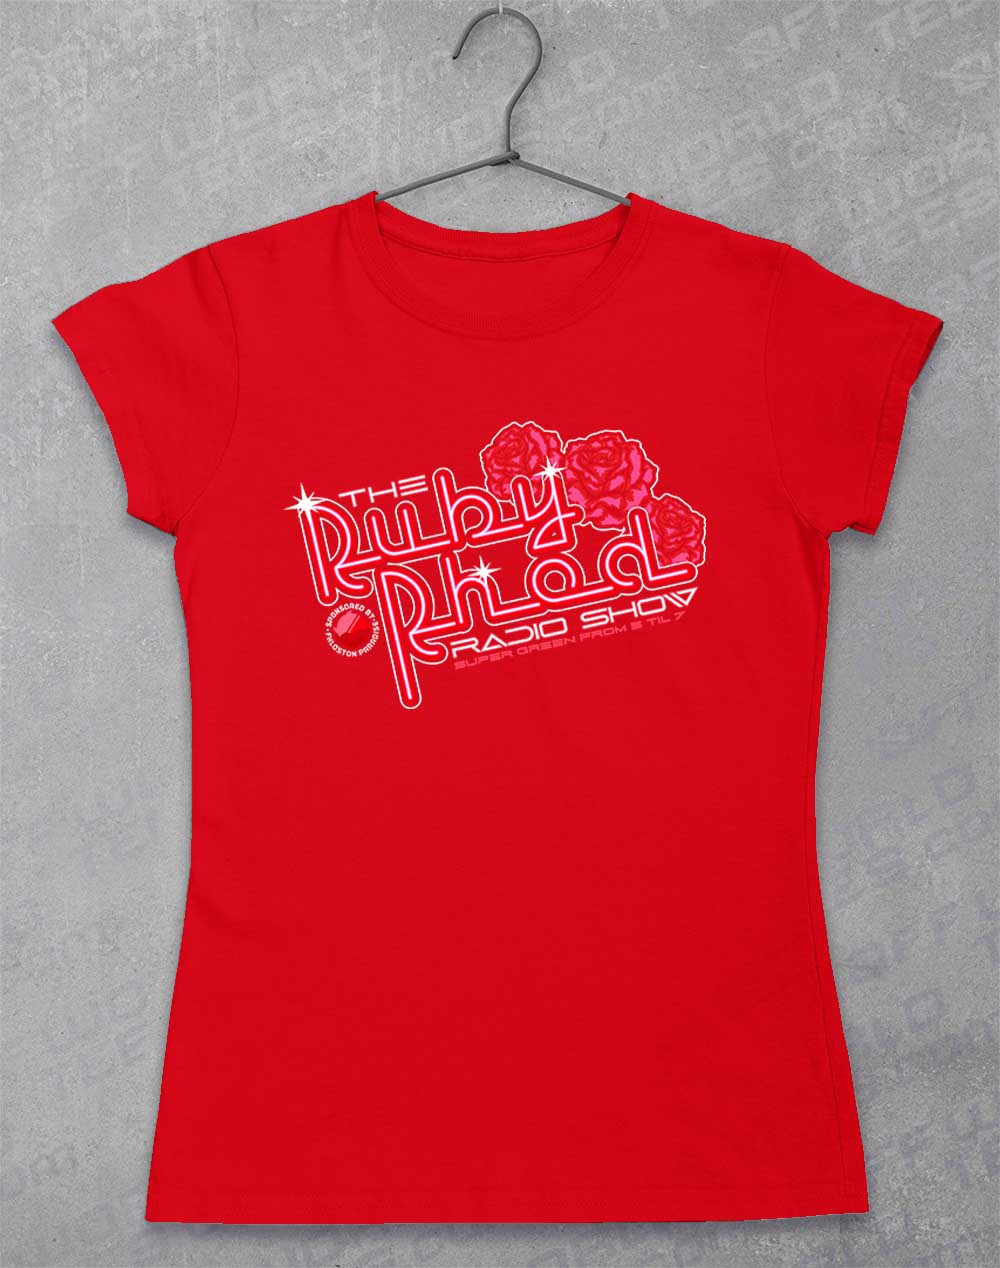 Red - Ruby Rhod Radio Show Women's T-Shirt